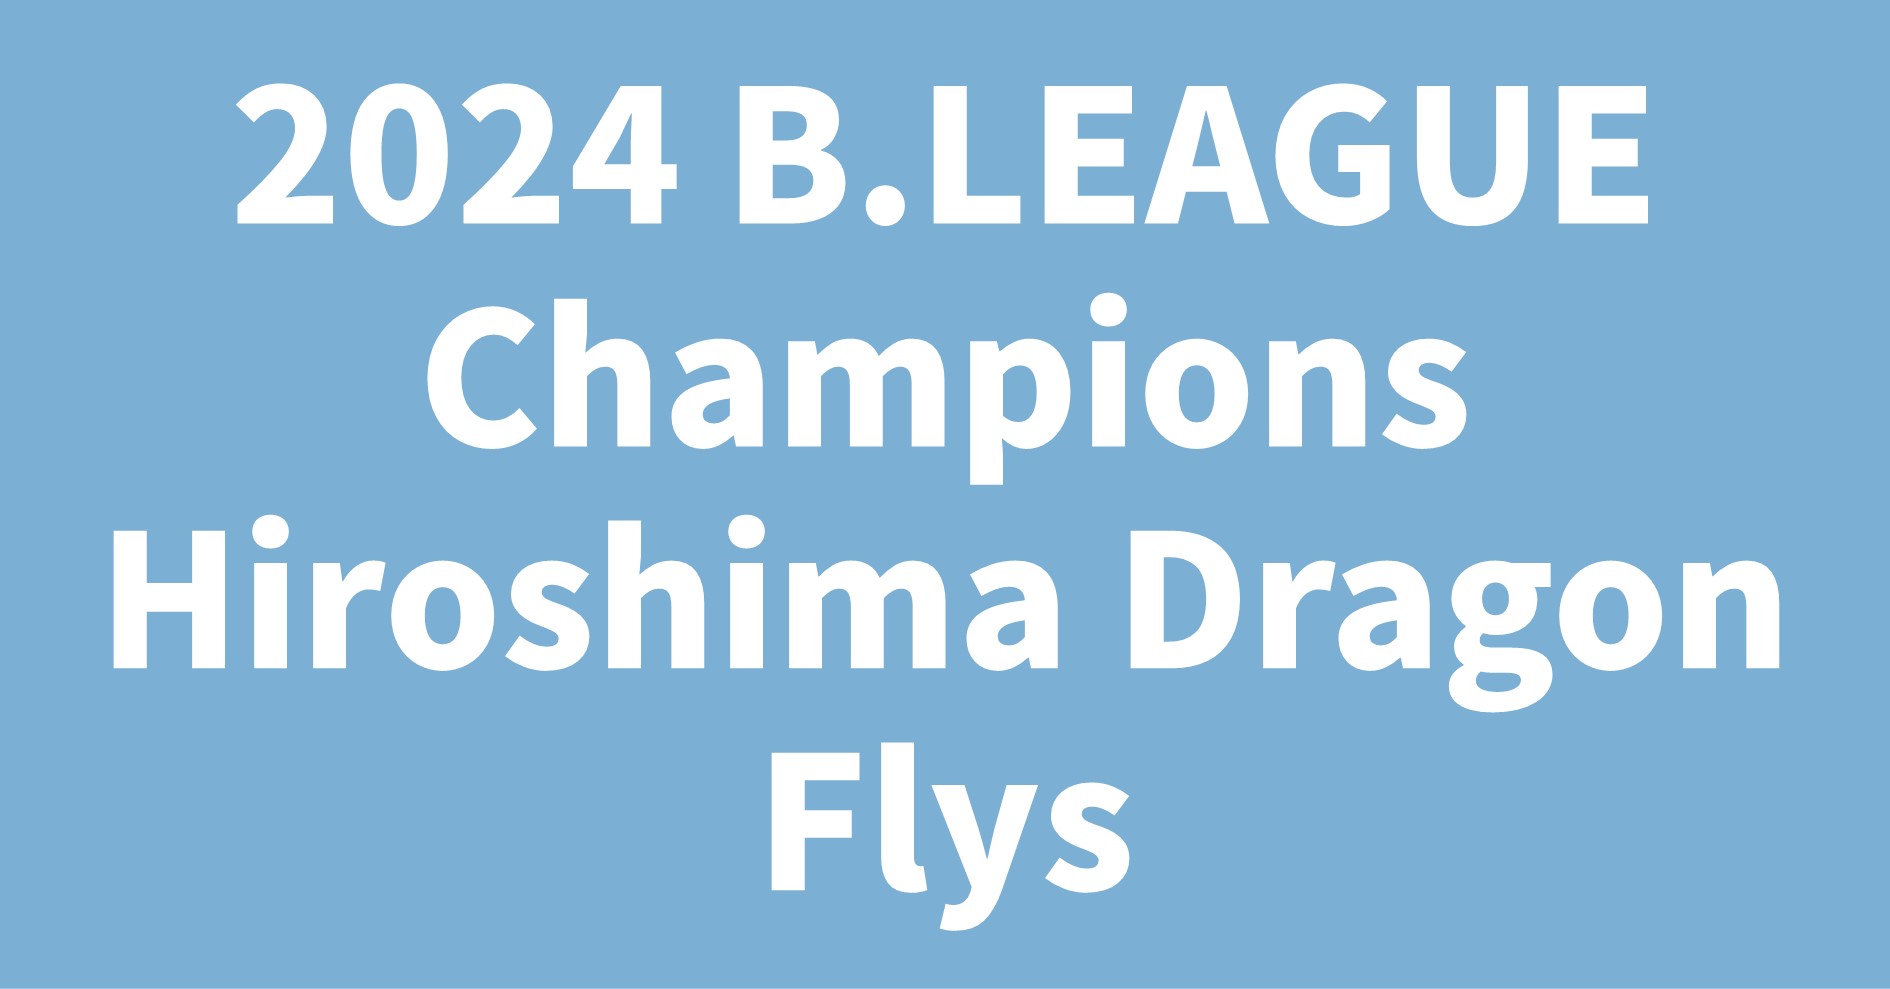 2024 B.LEAGUE Champions Hiroshima Dragon Flys